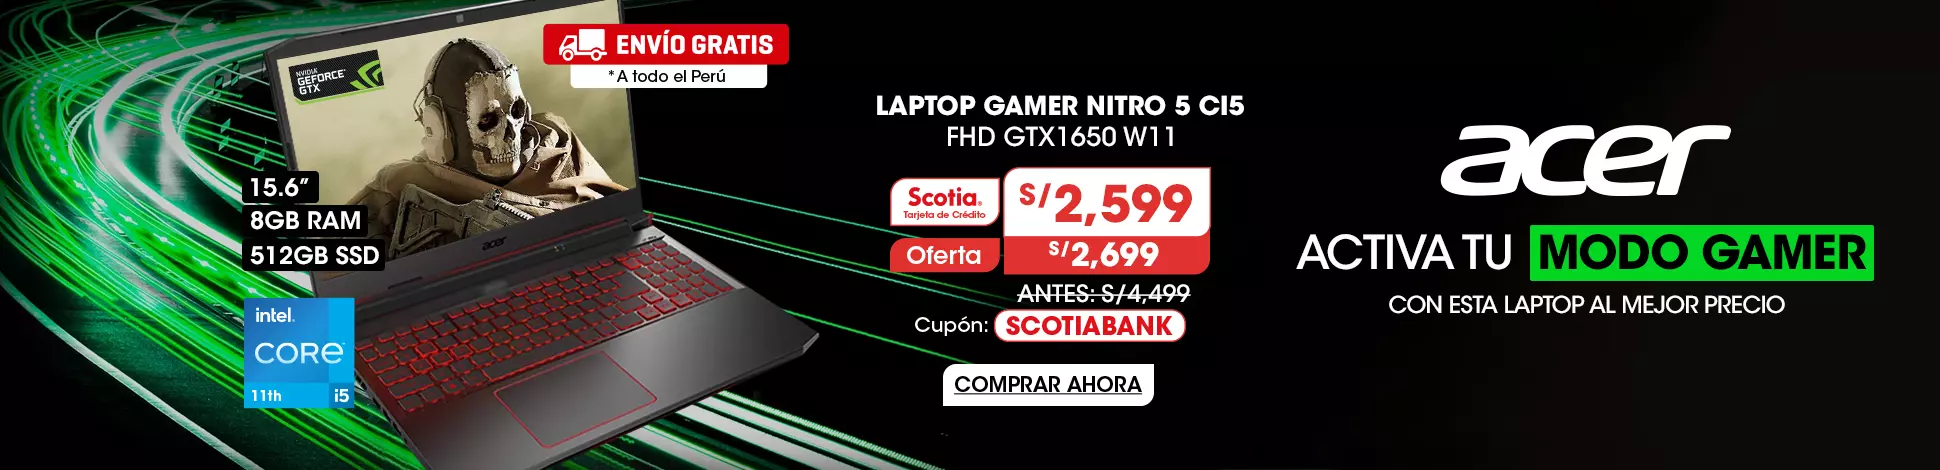 hs-acer-laptop-nitro-5b.webp | Juntoz.com